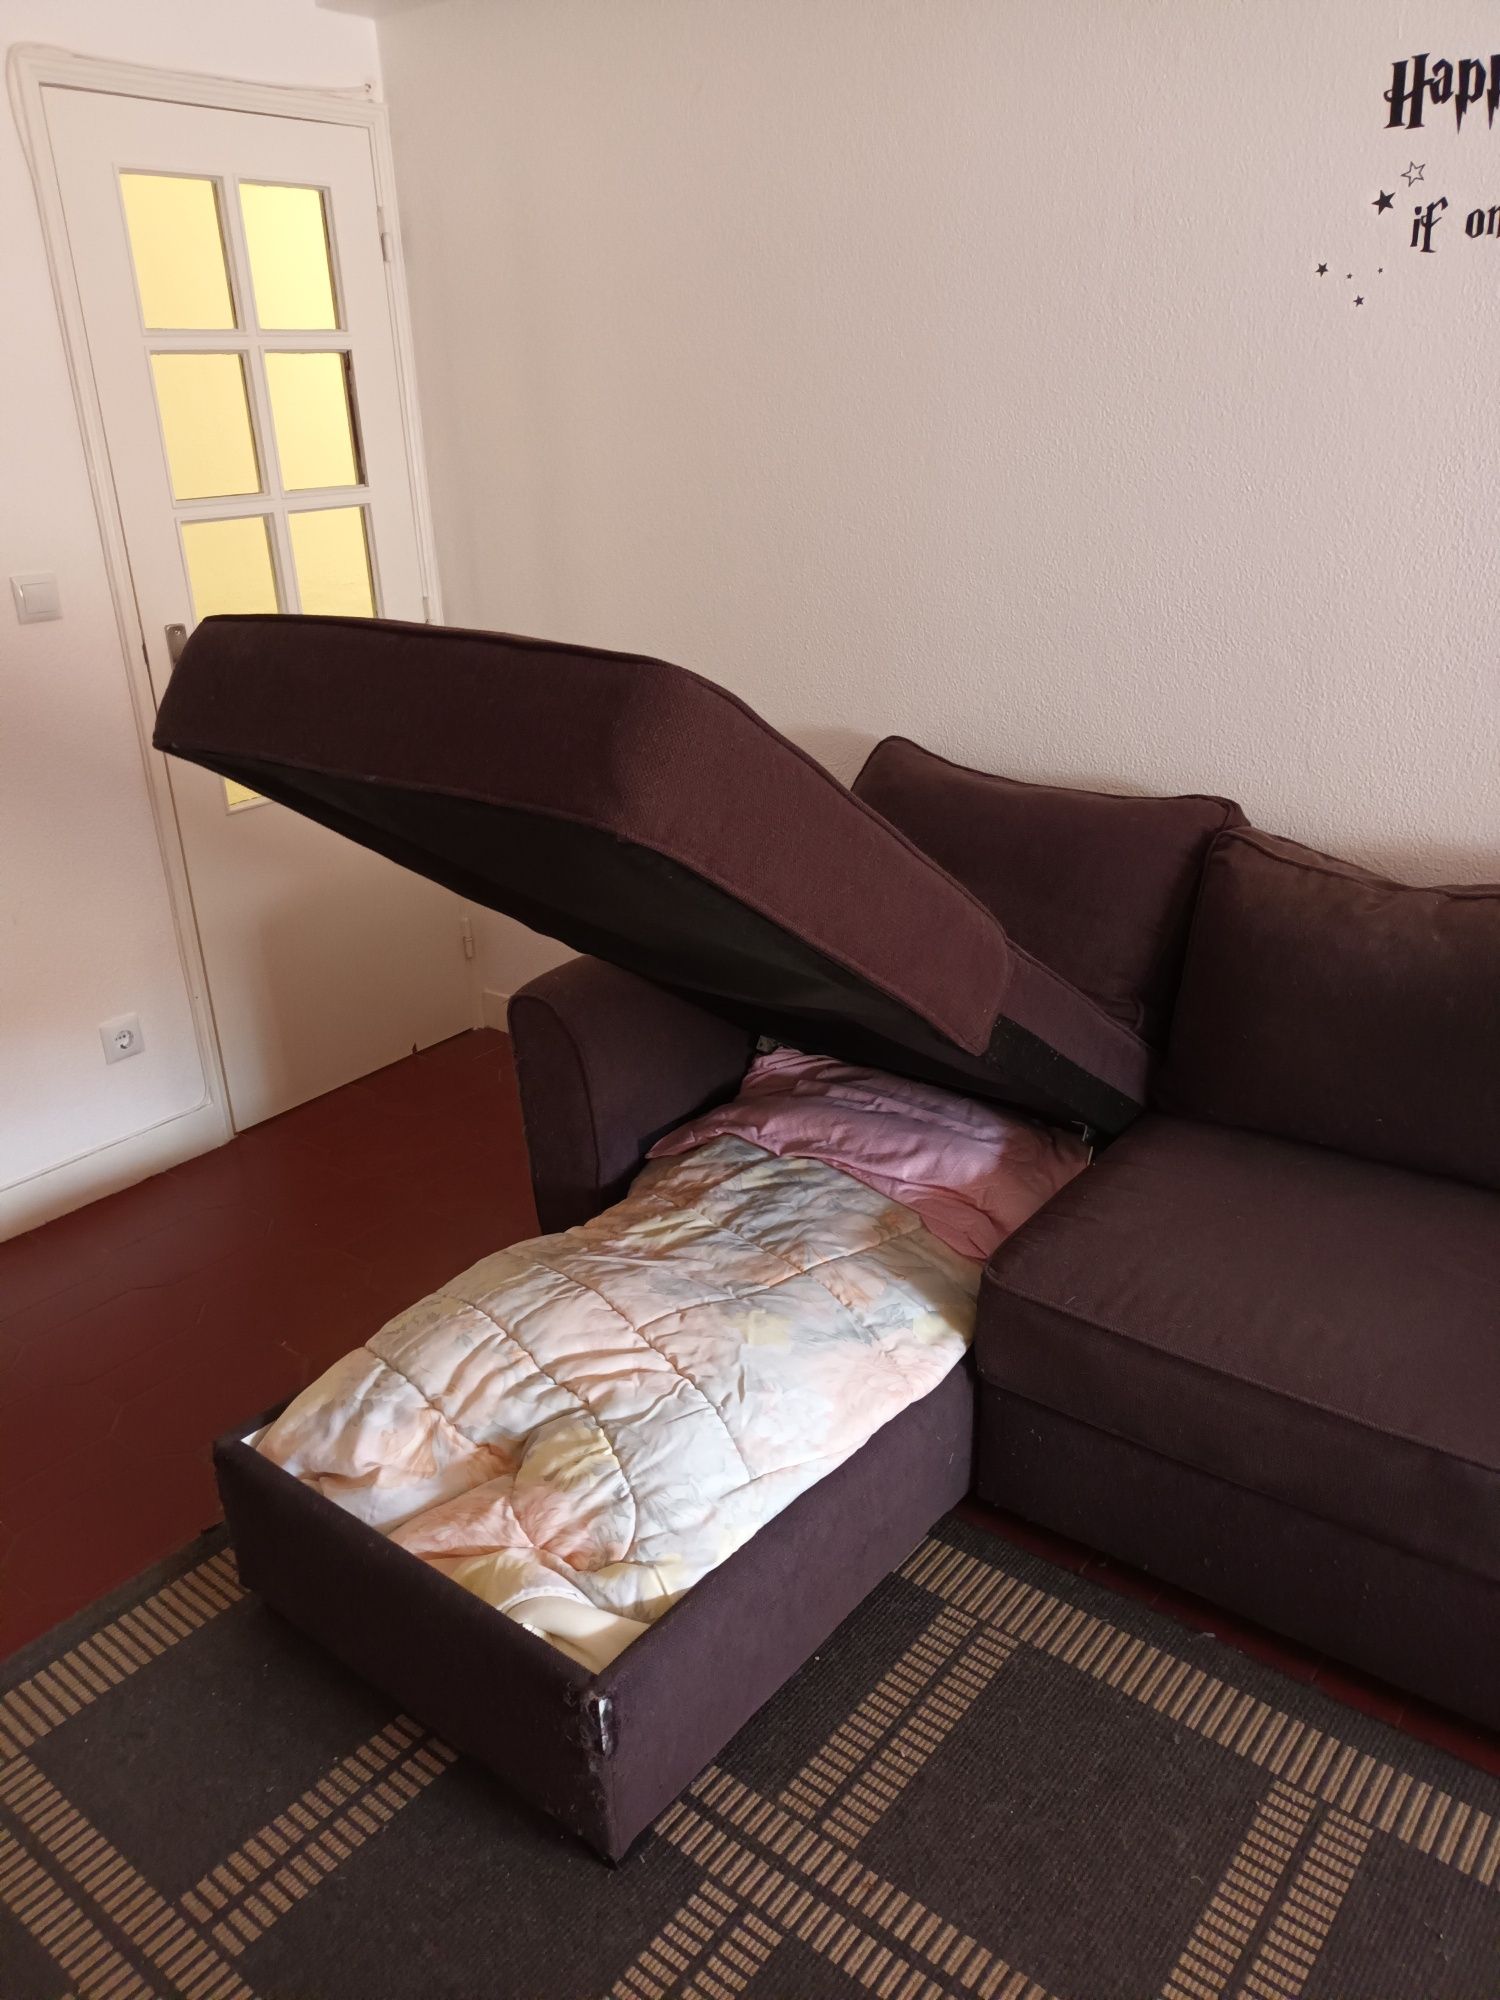 Sofá cama com chaise long